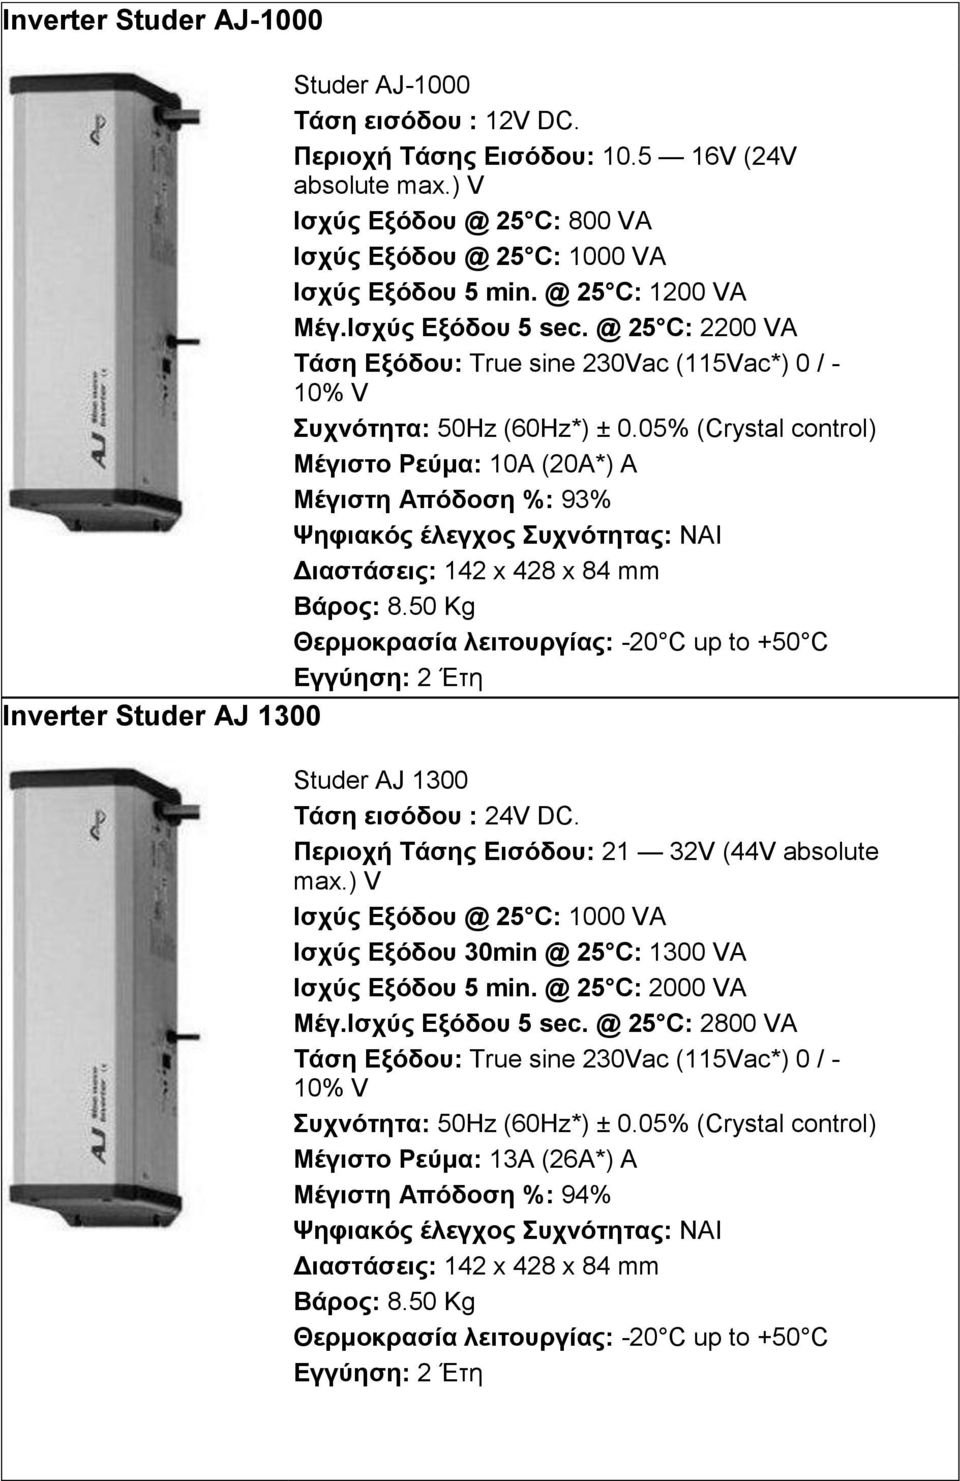 50 Kg Inverter Studer AJ 1300 Studer AJ 1300 Σάζη ειζόδος : 24V DC. Πεπιοσή Σάζηρ Διζόδος: 21 32V (44V absolute max.